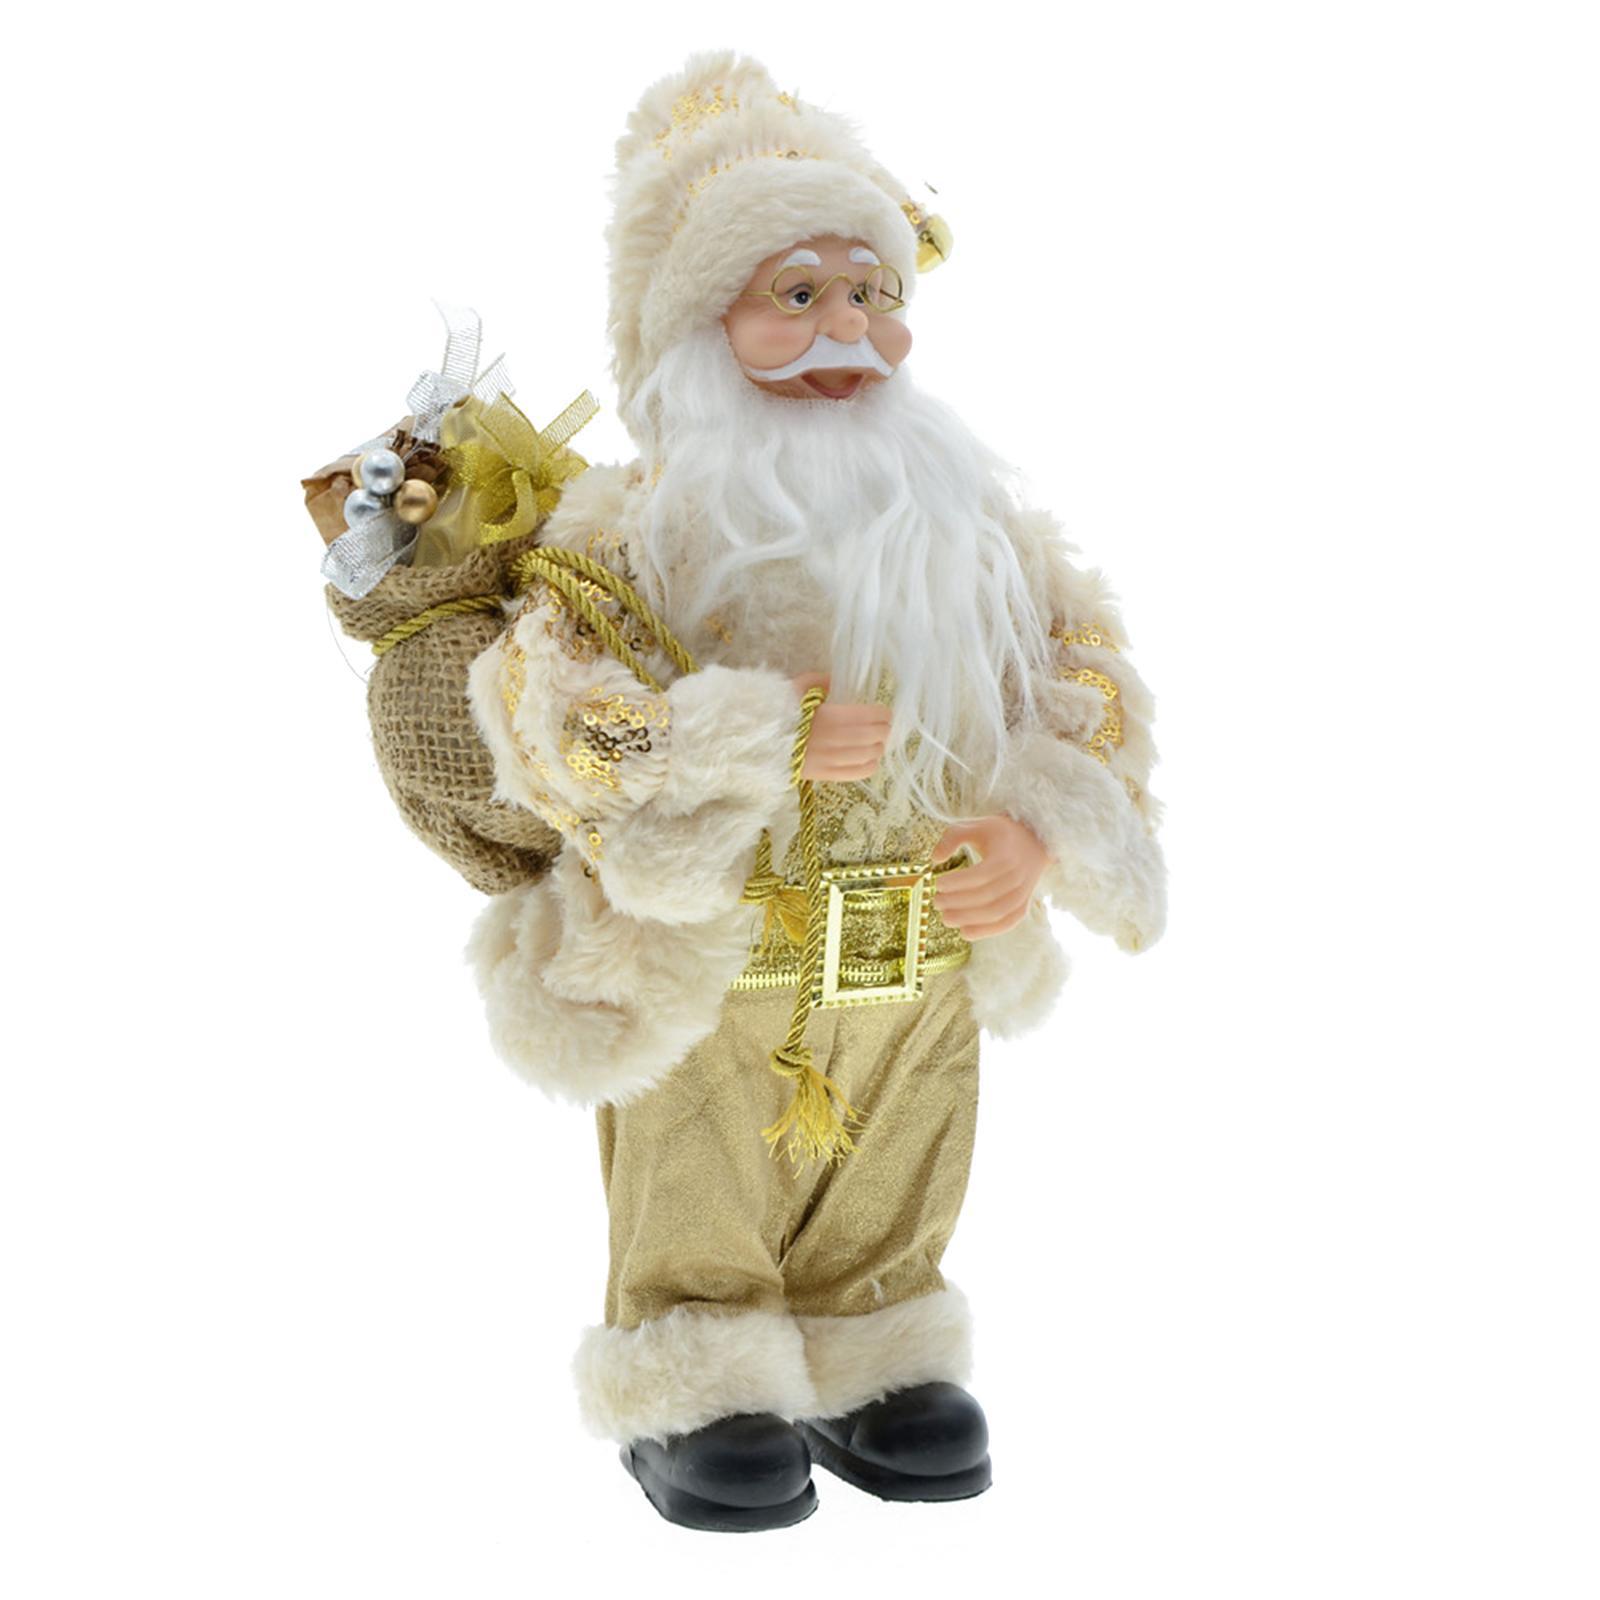 30cm Tall Standing Santa Doll Christmas Figure Ornament Gold Plush for Home